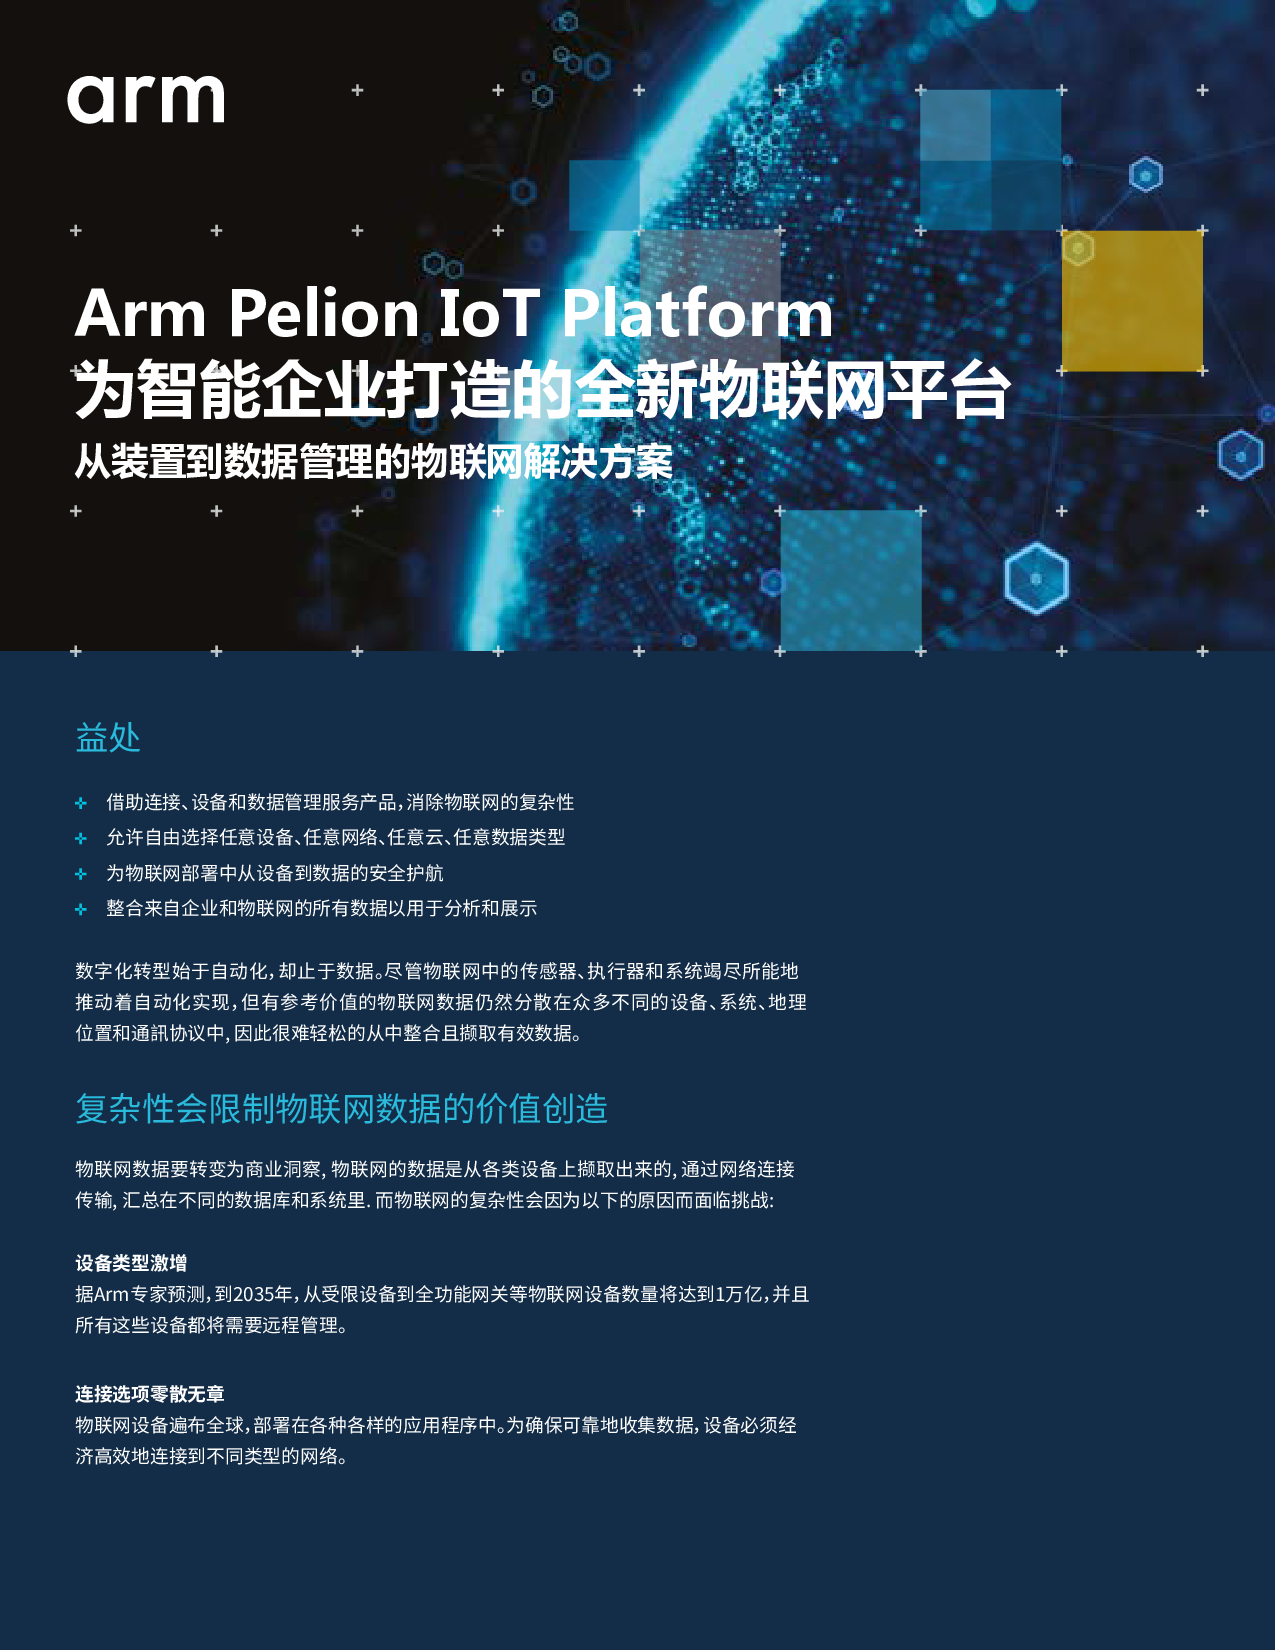 Arm Pelion物联网平台——为智能企业打造的全新物联网平台图片